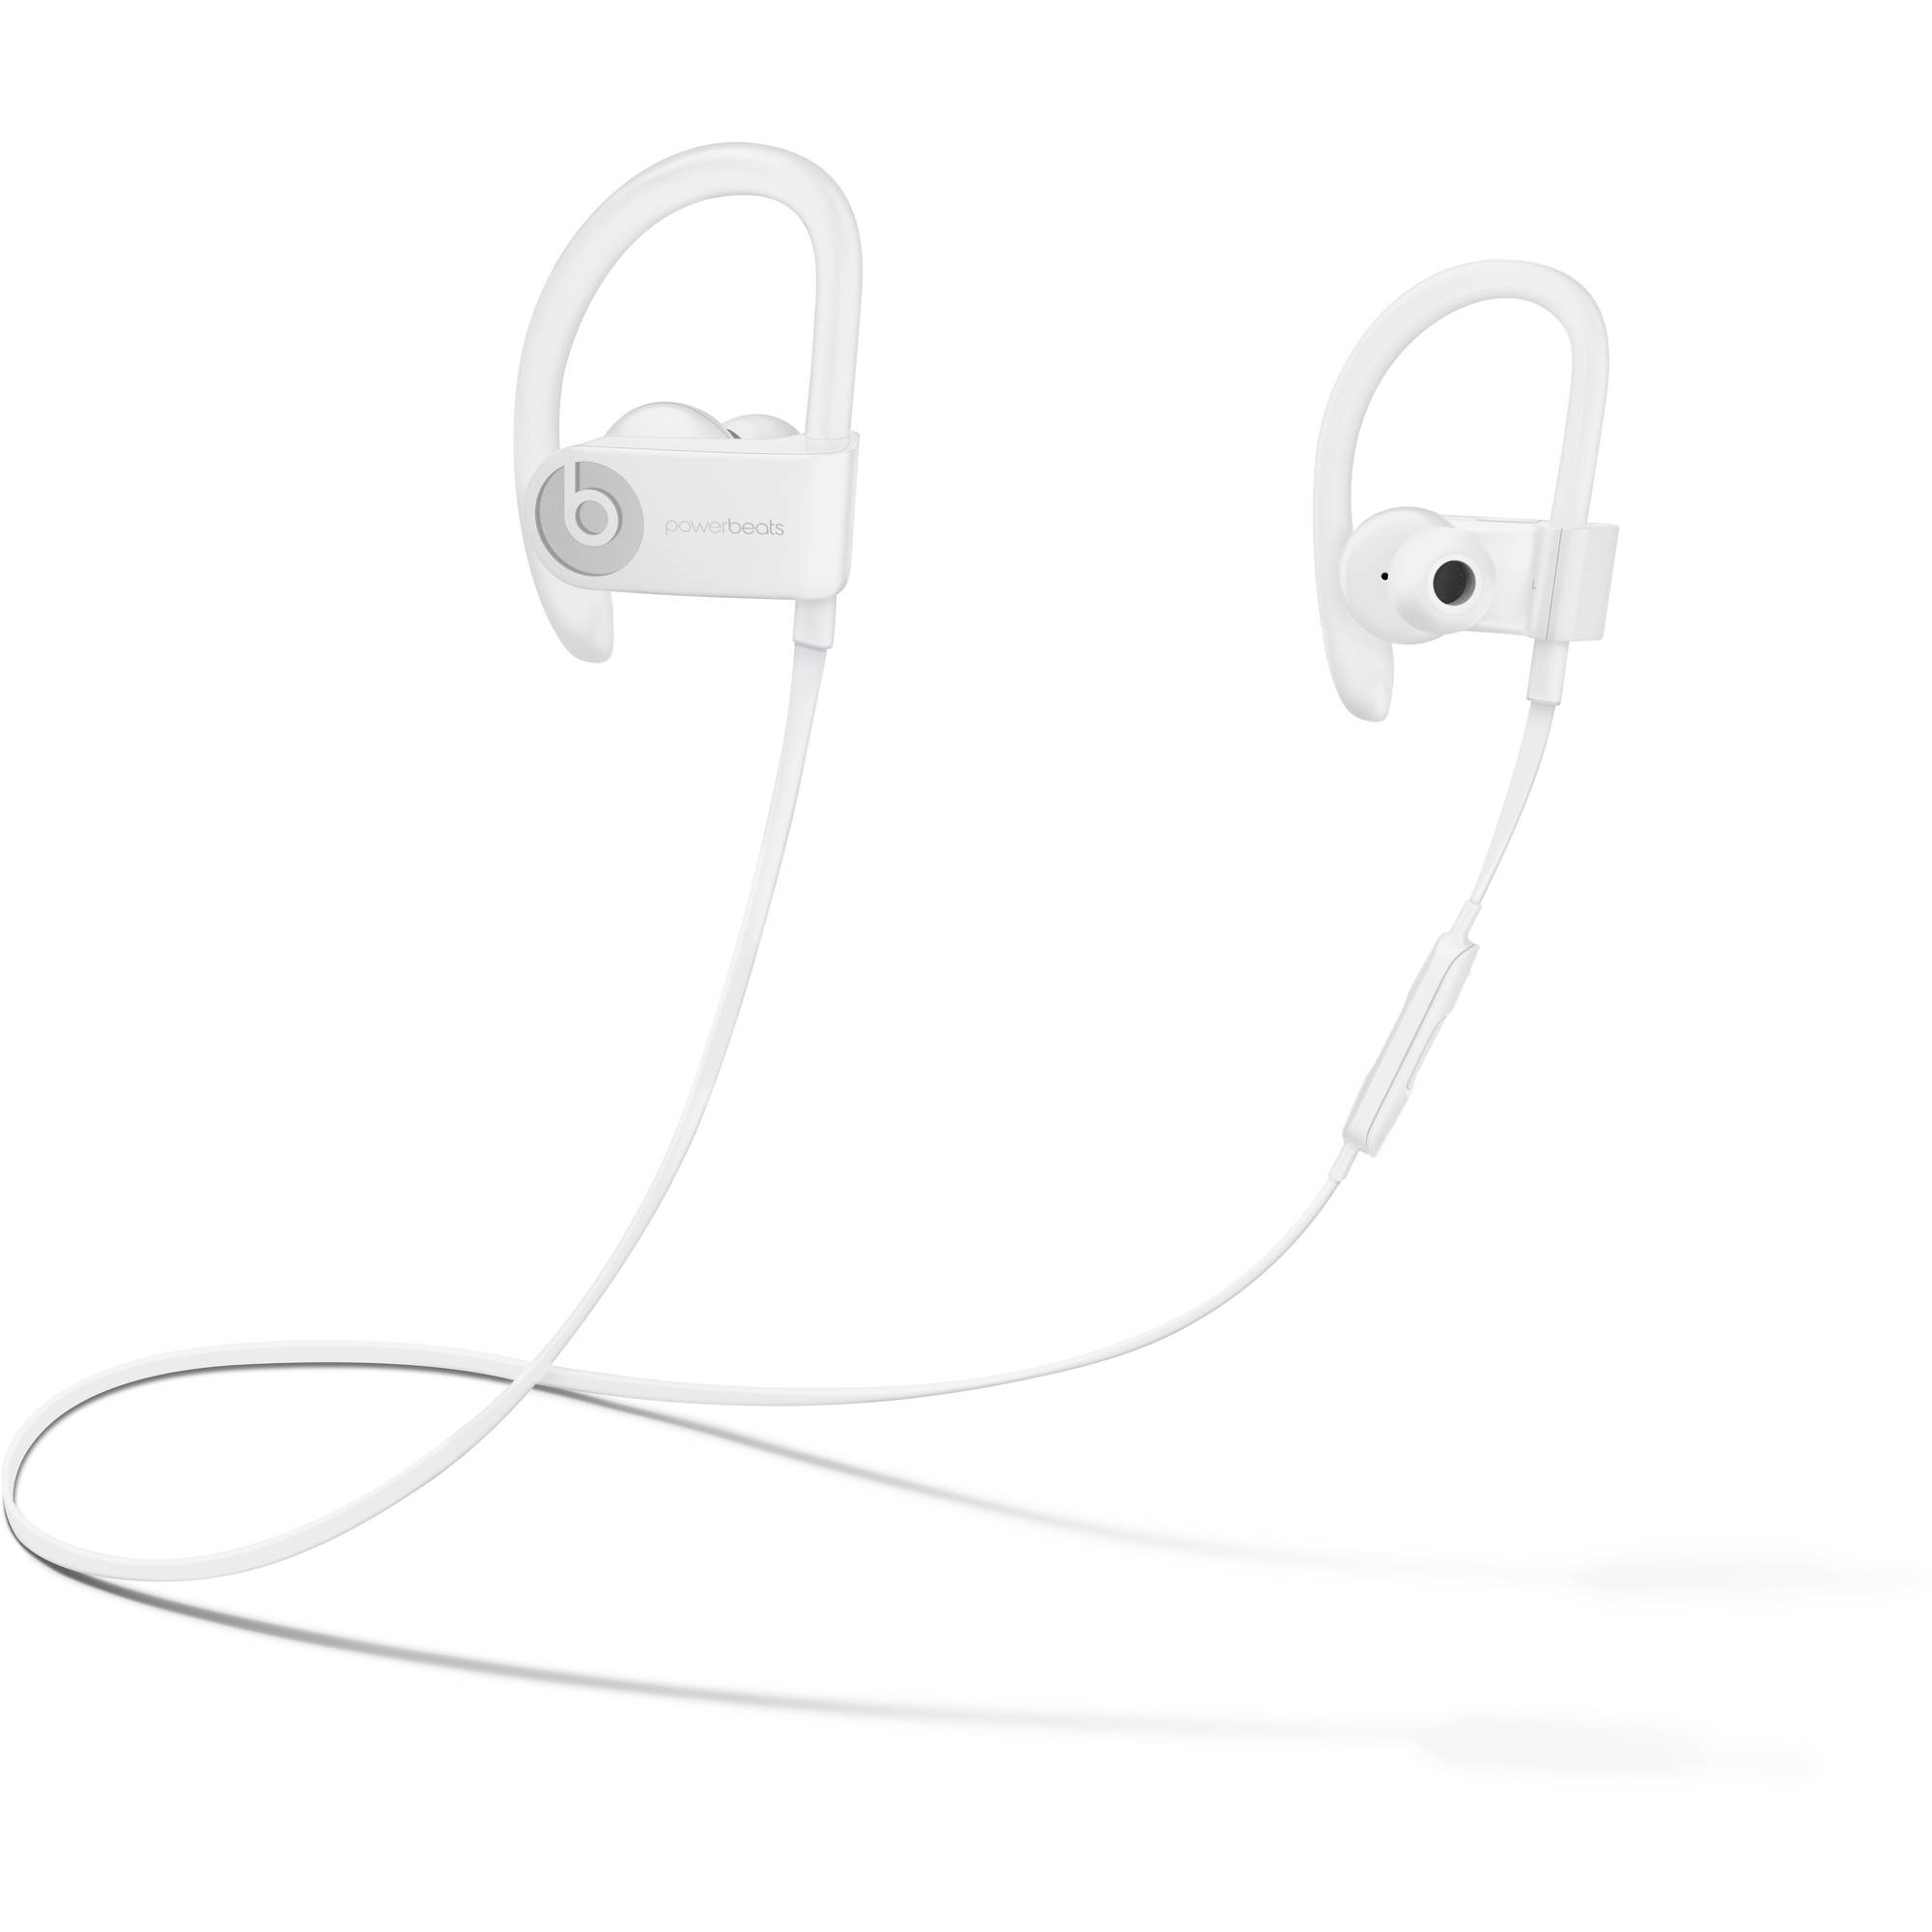 Restored Powerbeats3 Wireless In-Ear Headphones White (Refurbished) - image 1 of 2